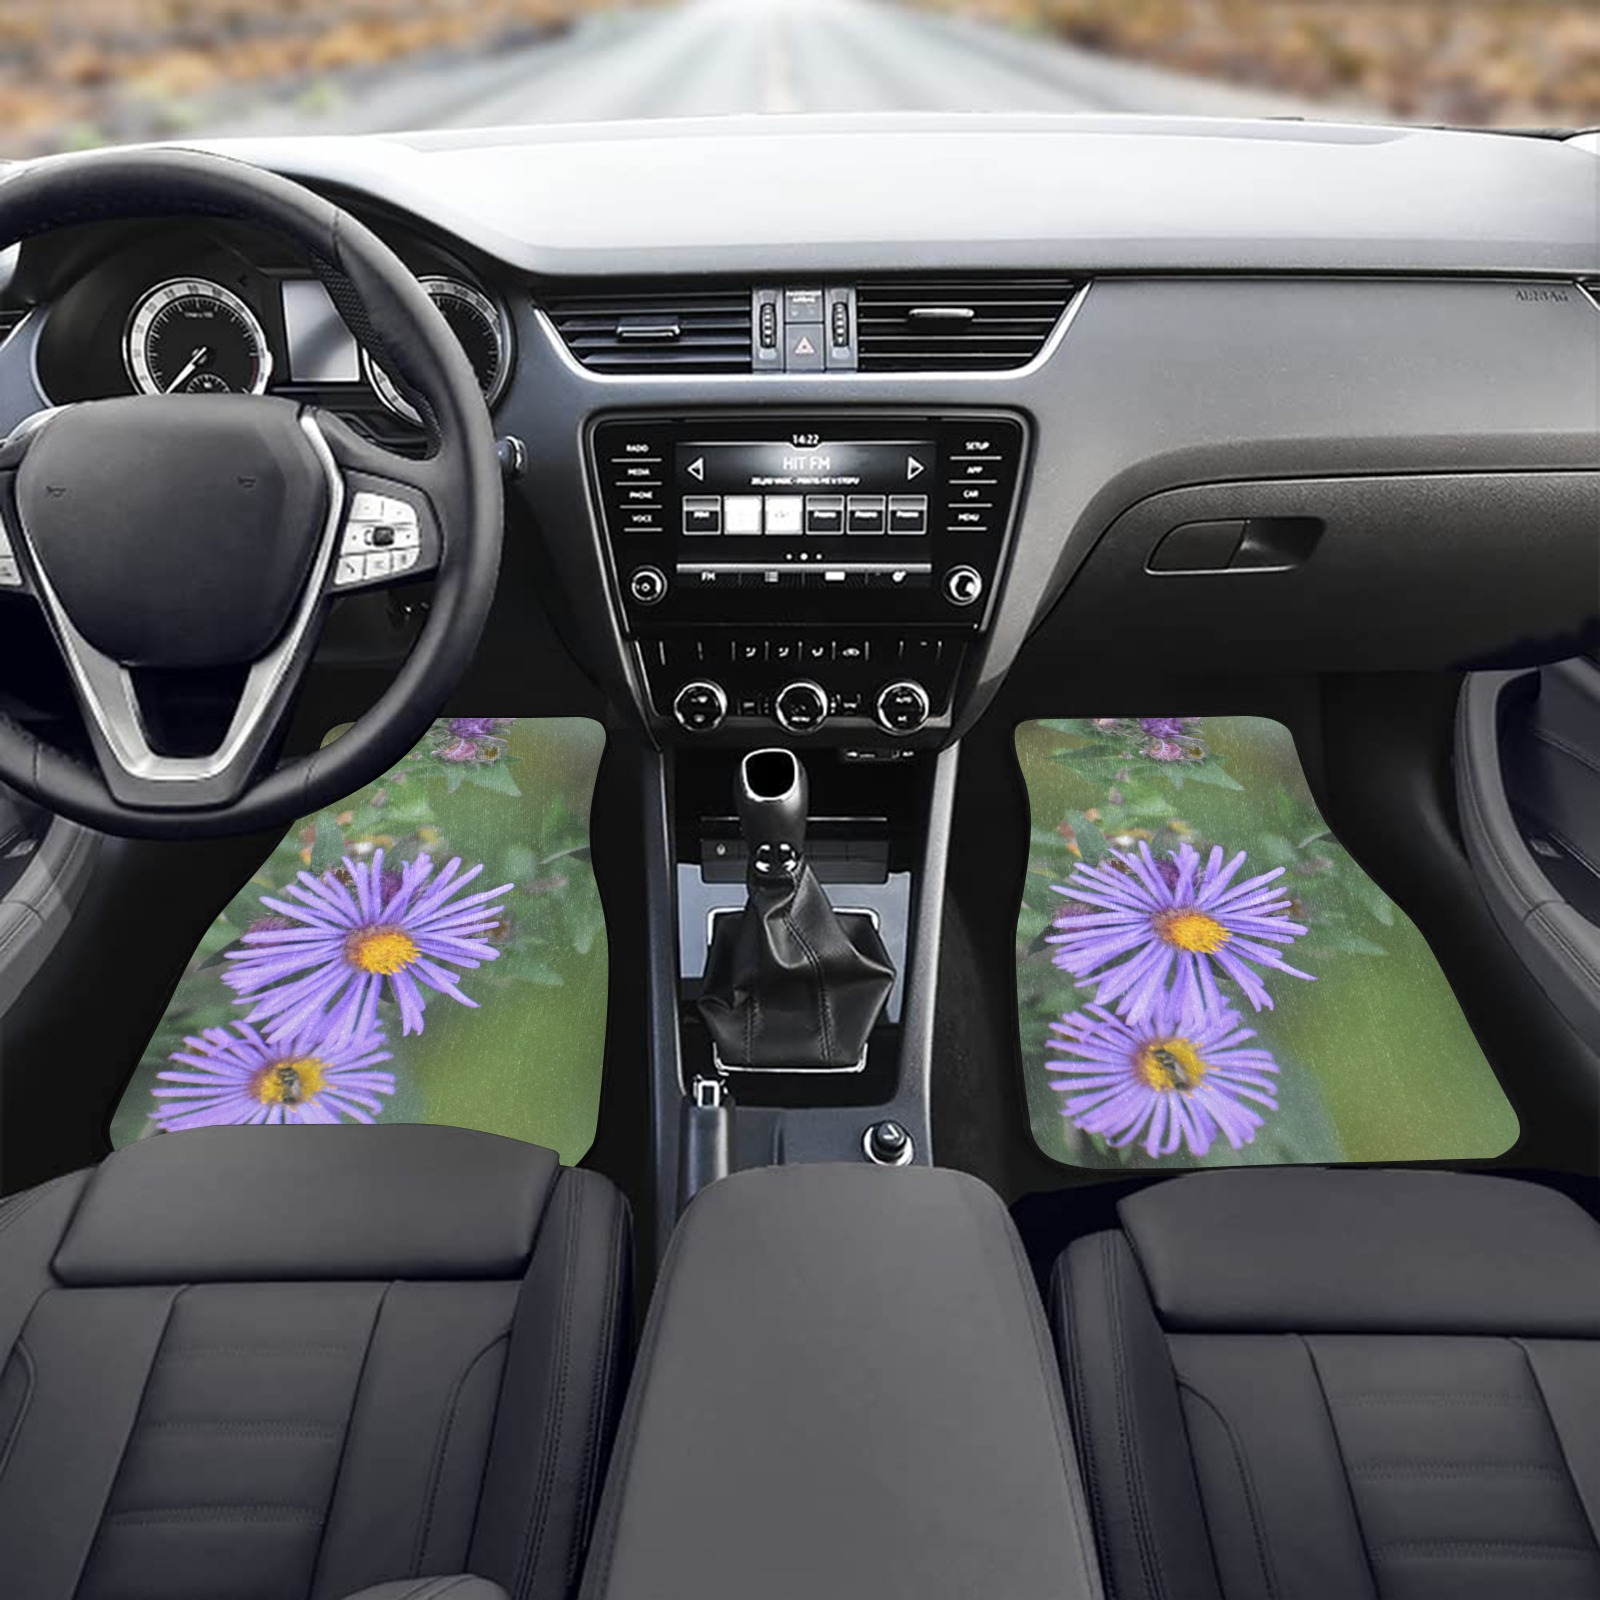 purpleflowers Front Car Floor Mat (2pcs)